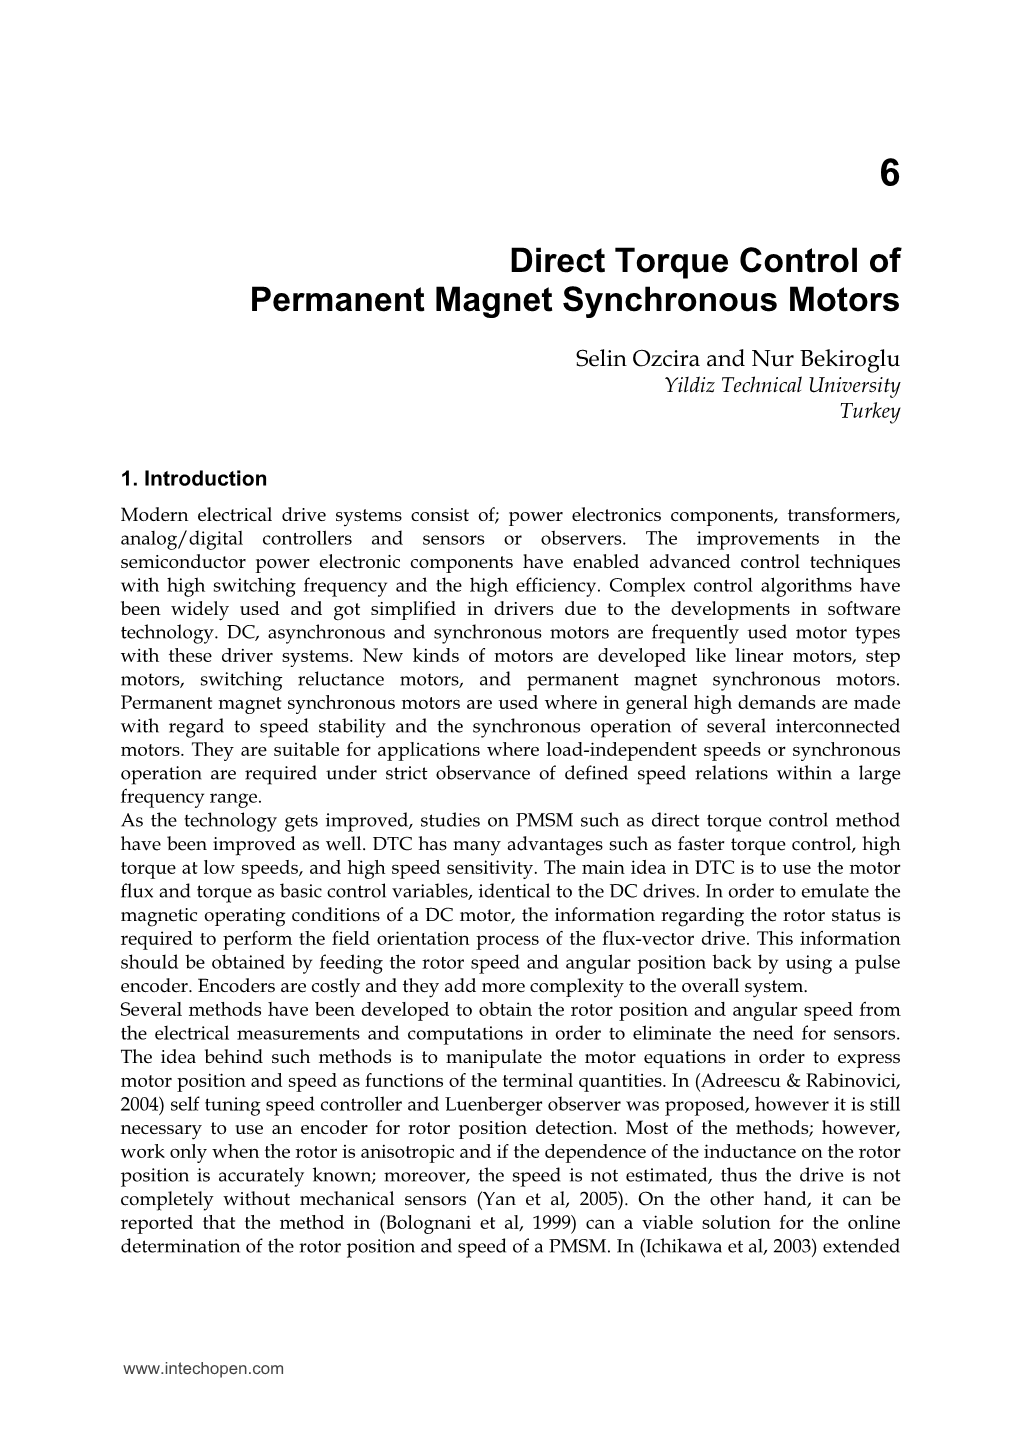 Direct Torque Control of Permanent Magnet Synchronous Motors